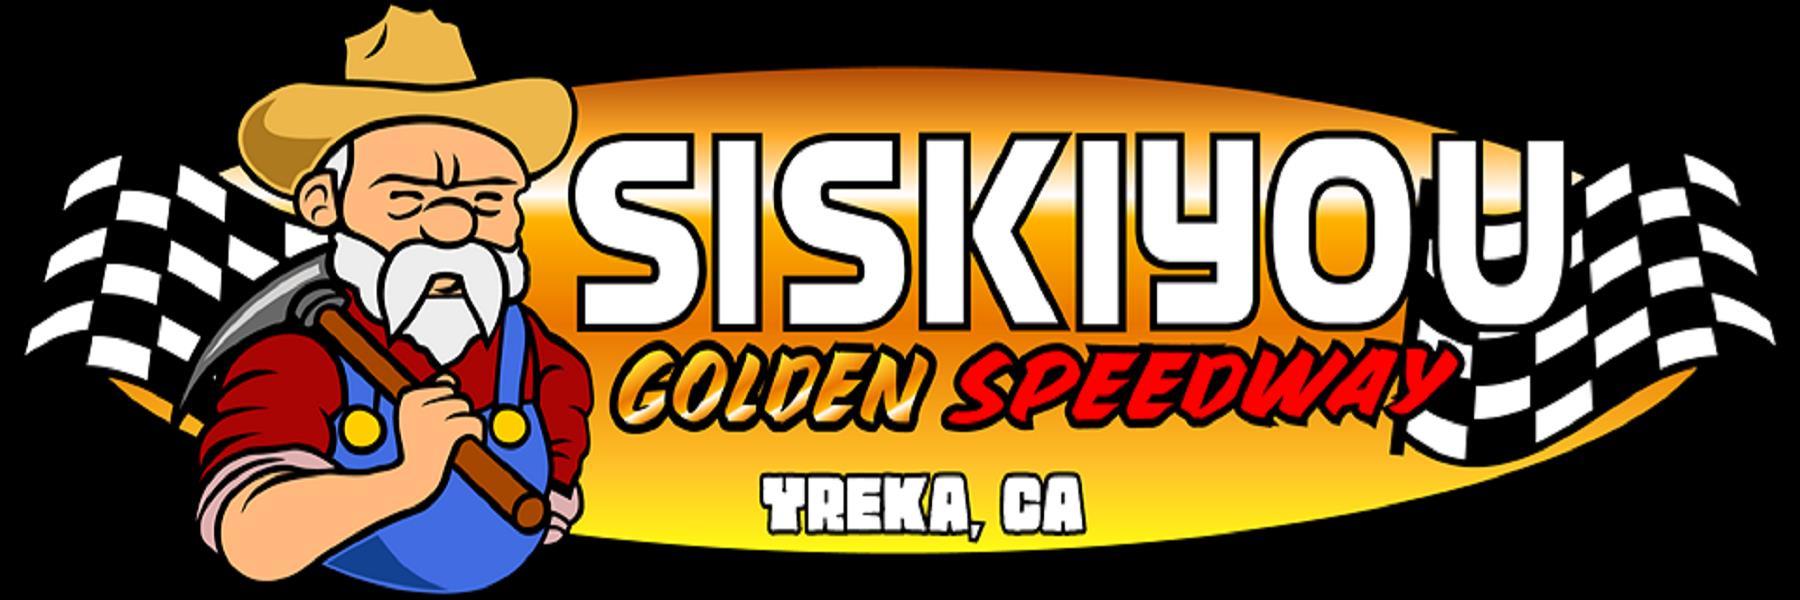 6/17/2022 - Siskiyou Golden Speedway